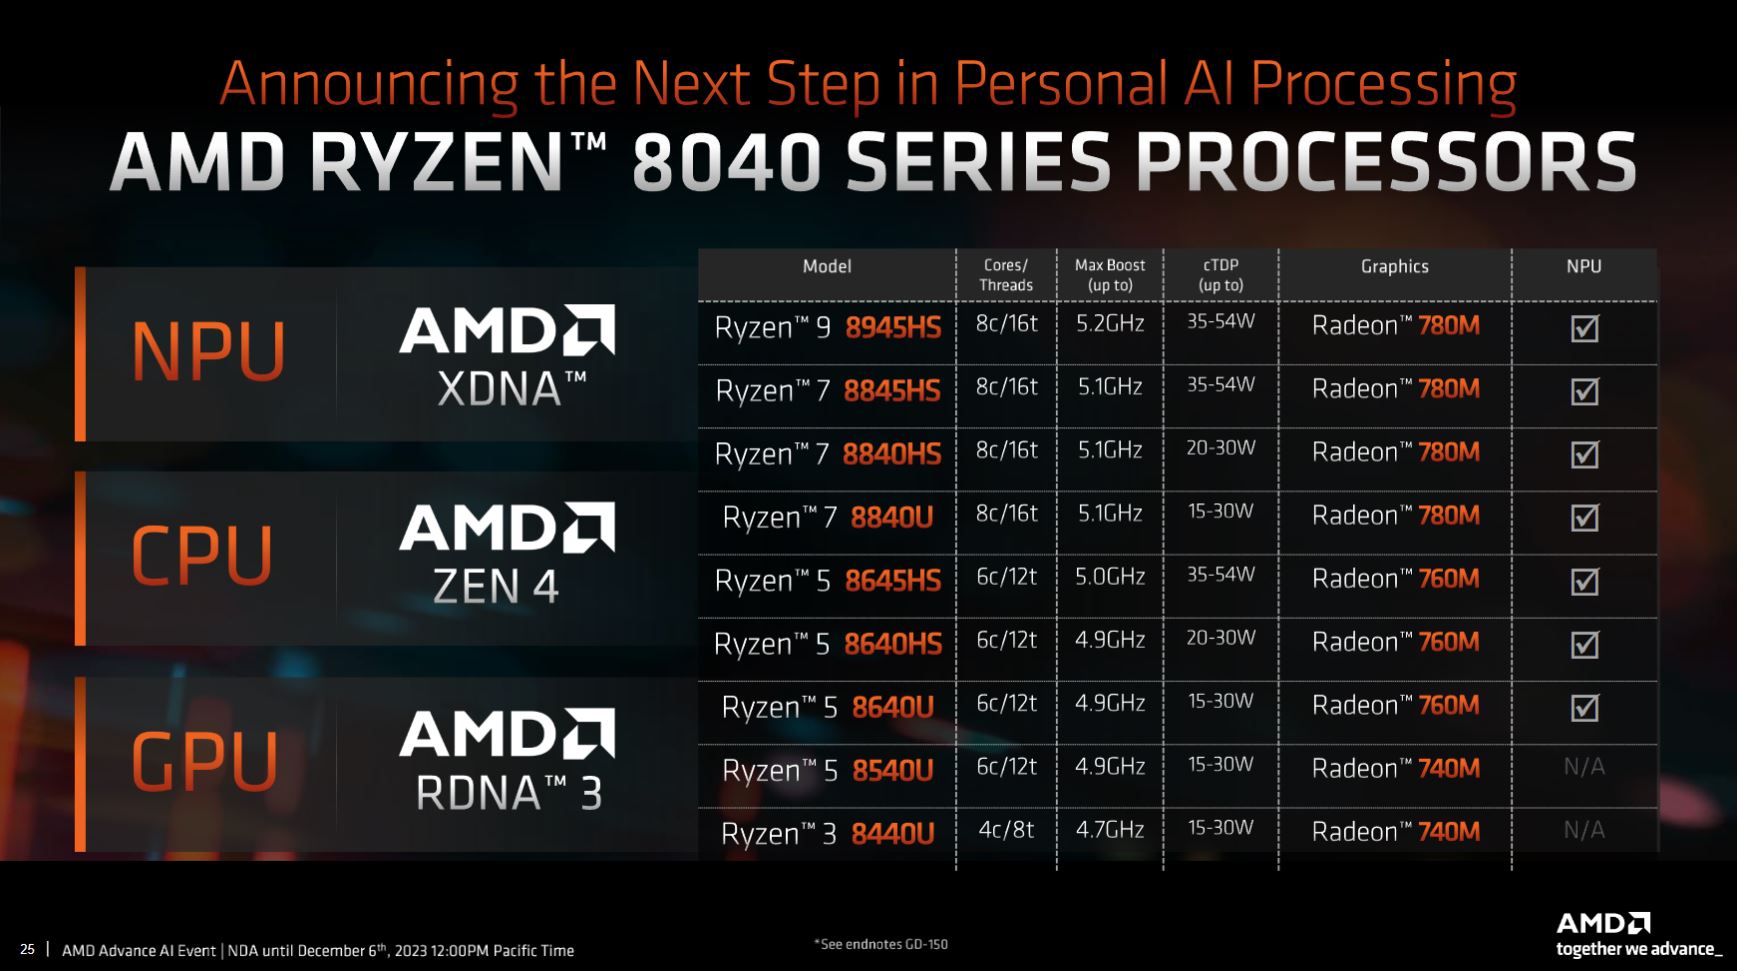 The AMD Ryzen 8040 Series SKU stack showing nine models.